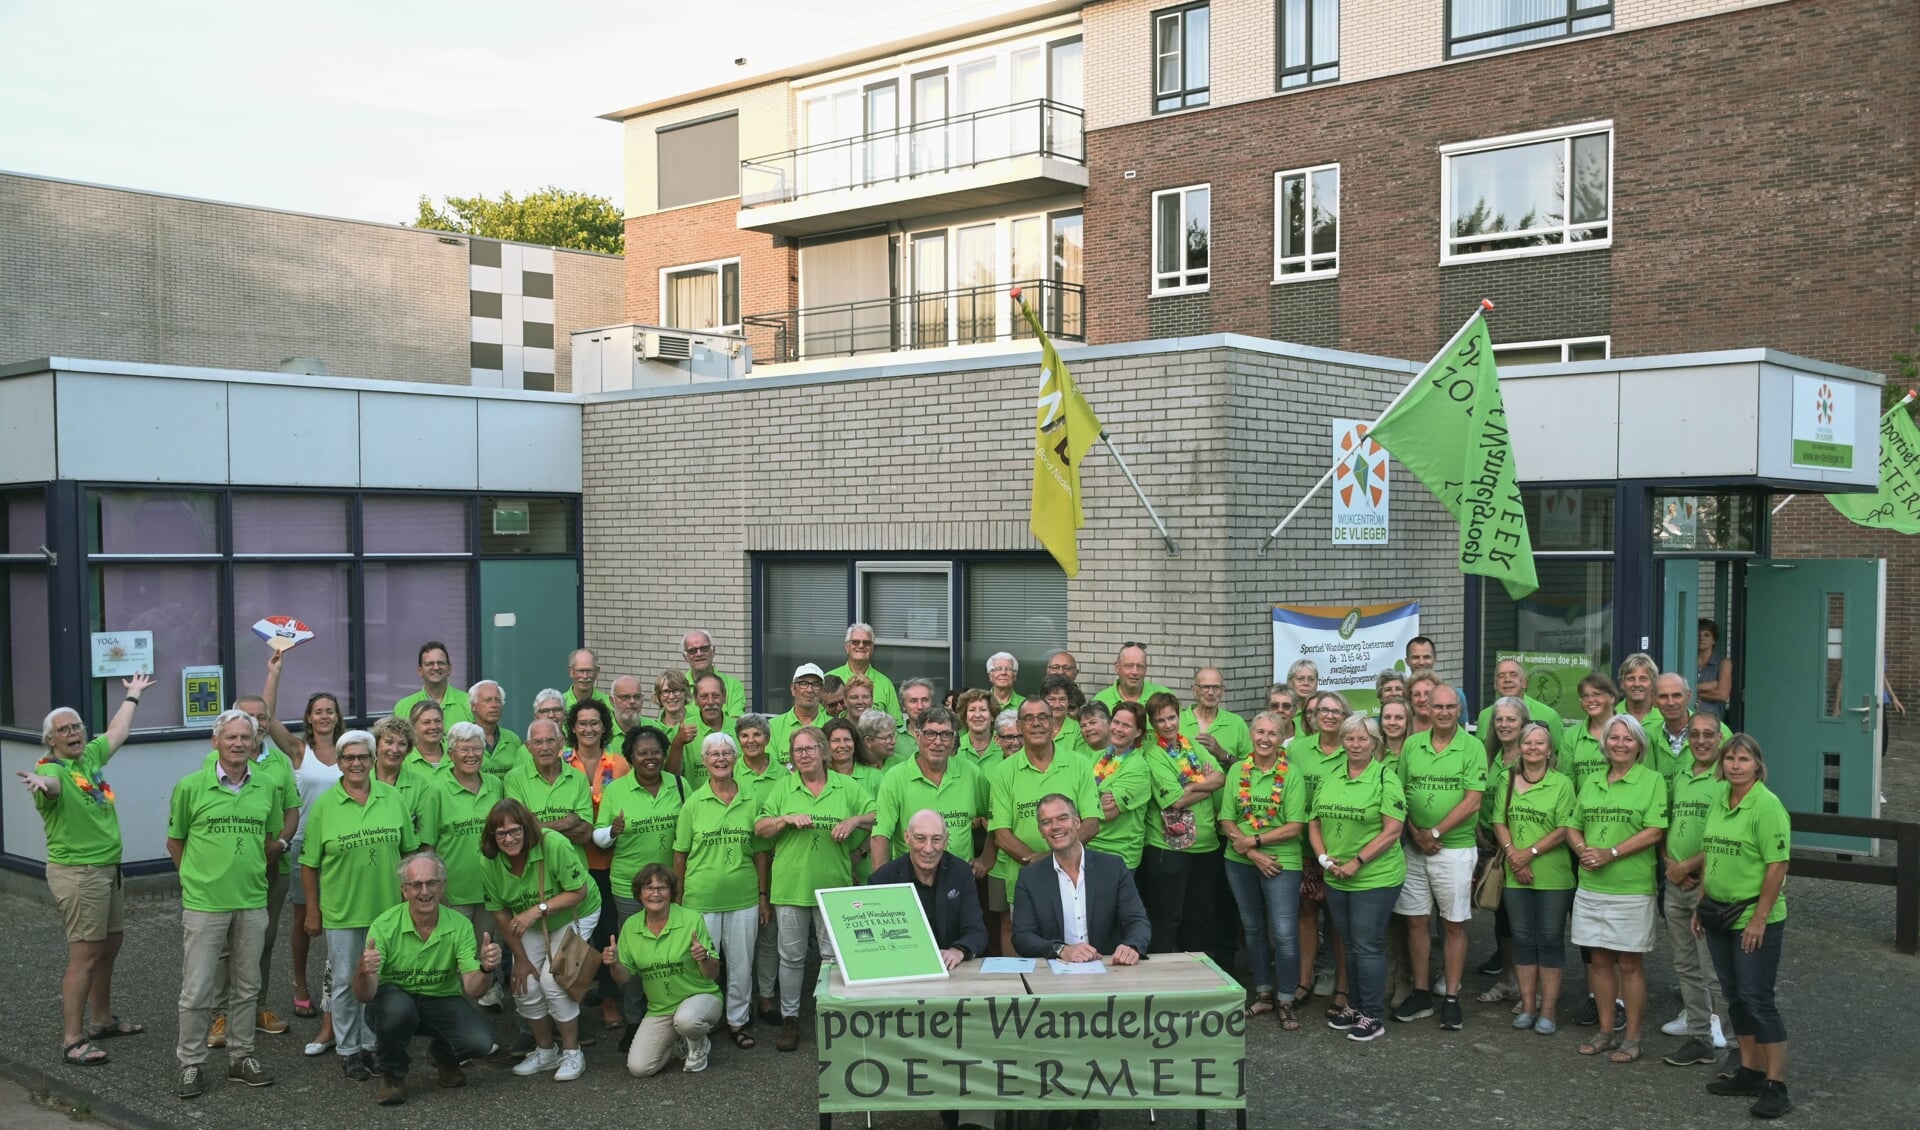 Het team van Sportief Wandelgroep Zoetermeer